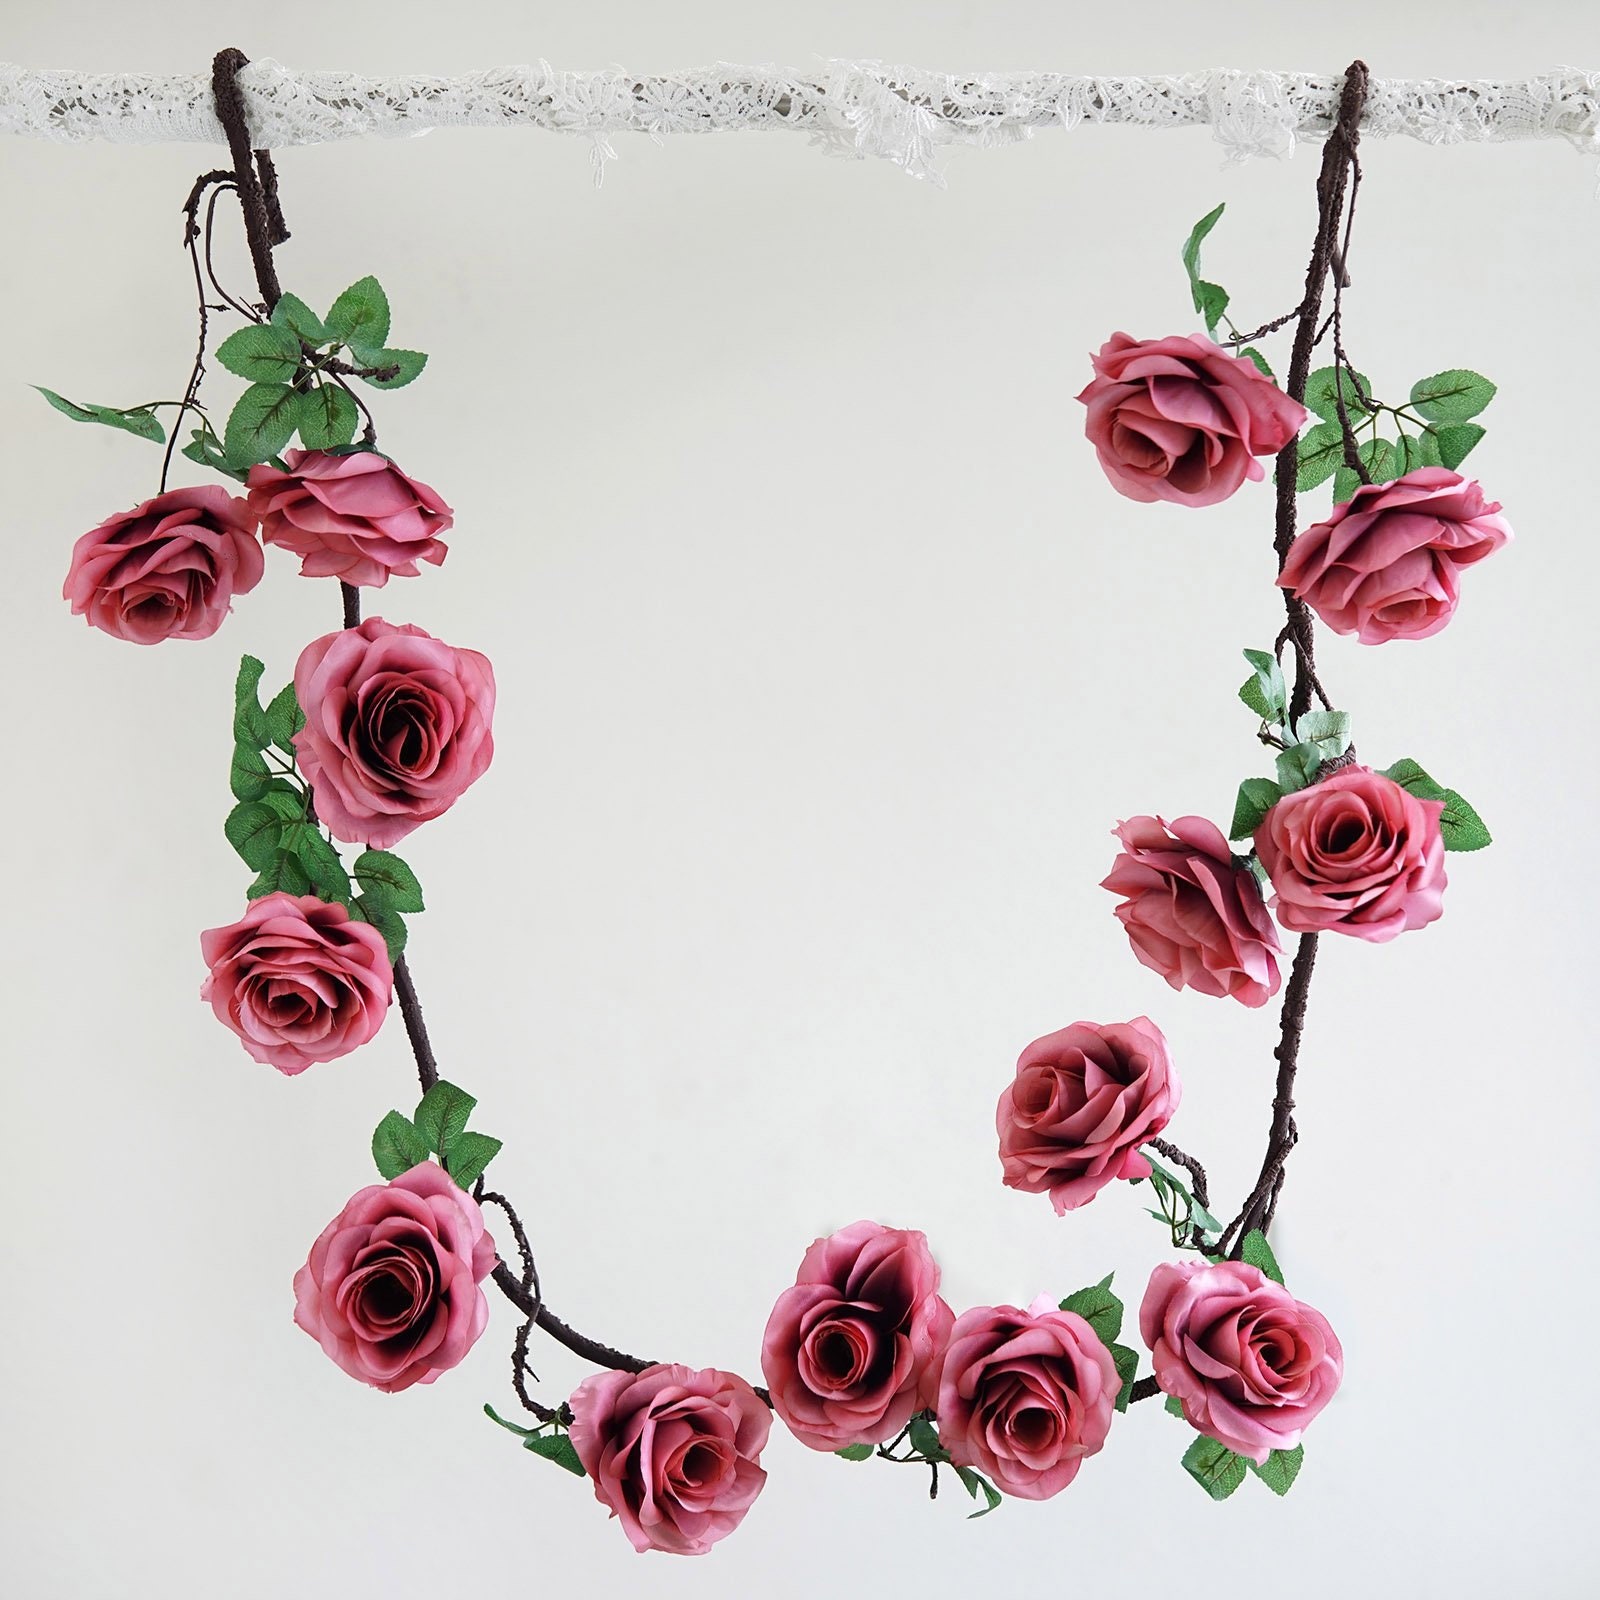 Efavormart Assorted Colors Artificial Foam Roses & Silk Peonies Mix Flower Box DIY Flower Bouquets - Ideal for Wedding Ceremonies, Festivals, Parties